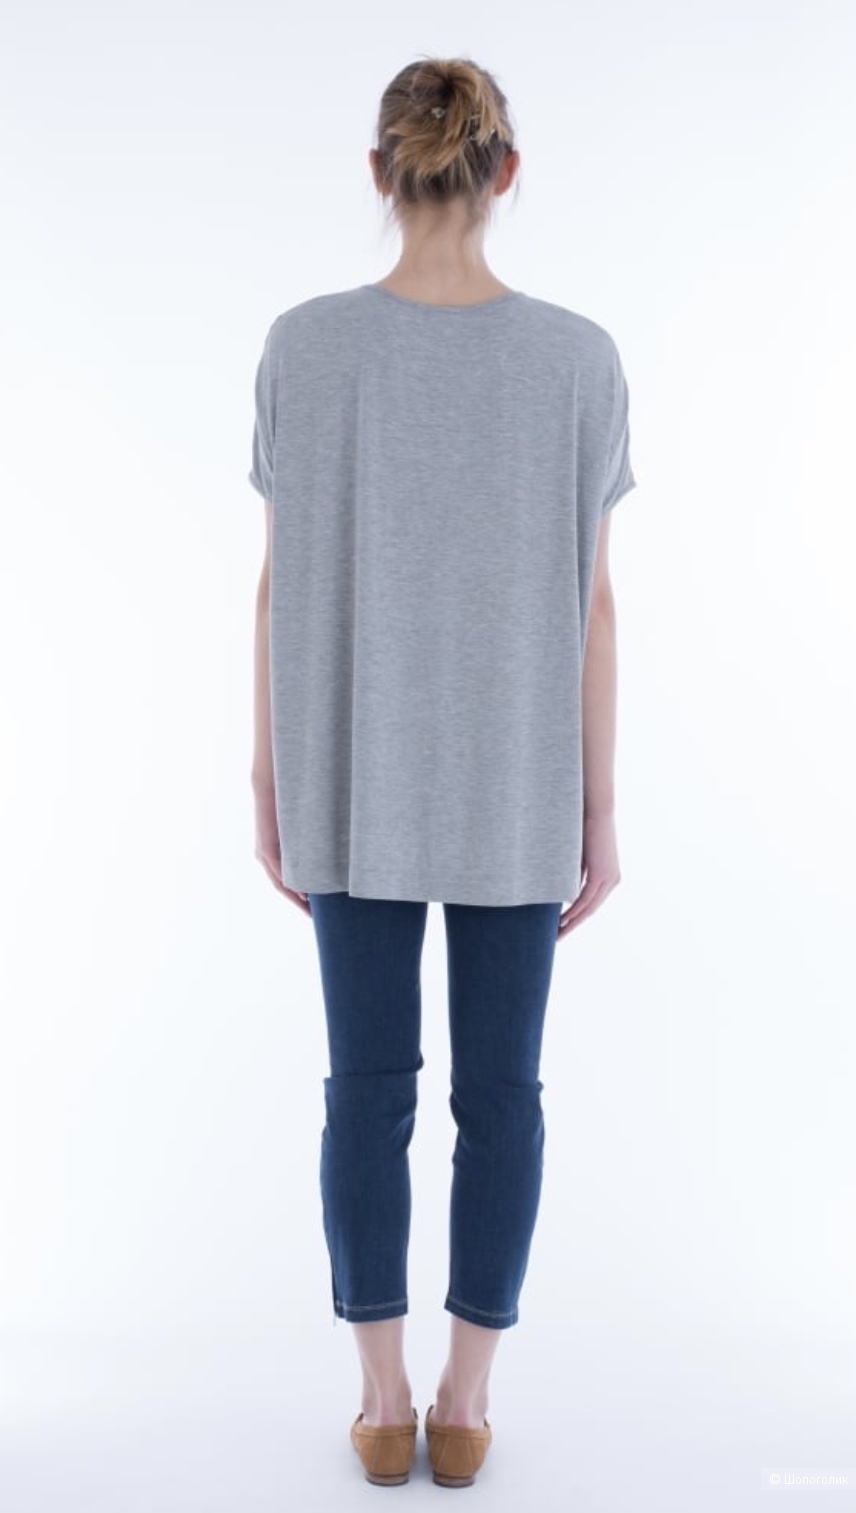 Шелковая блузка (футболка) бренда Anni Carlsson, размер S/M/L/XL/XXL